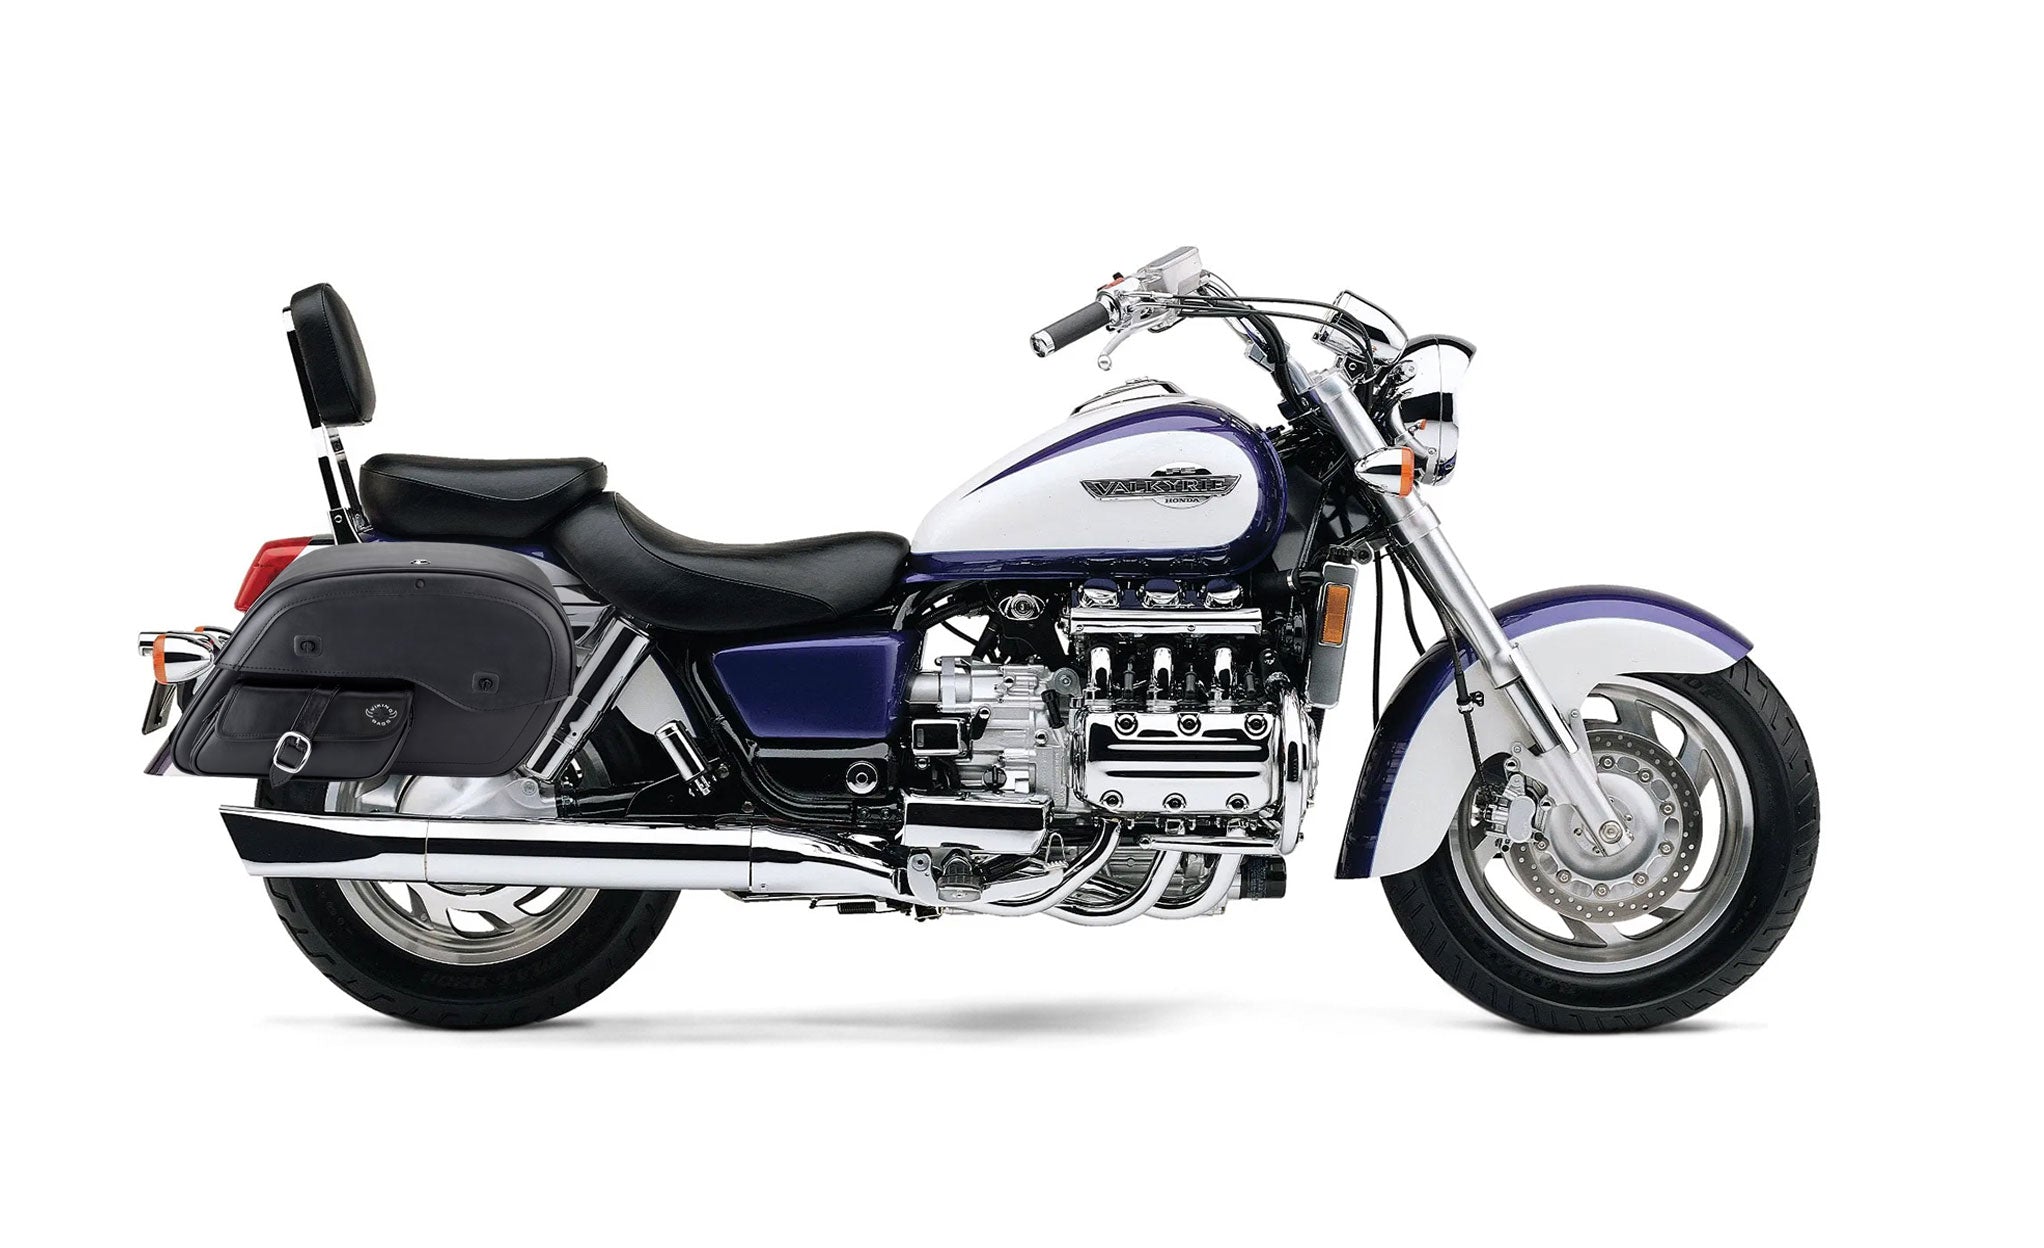 Viking Essential Side Pocket Large Honda Valkyrie 1500 Interstate Leather Motorcycle Saddlebags on Bike Photo @expand